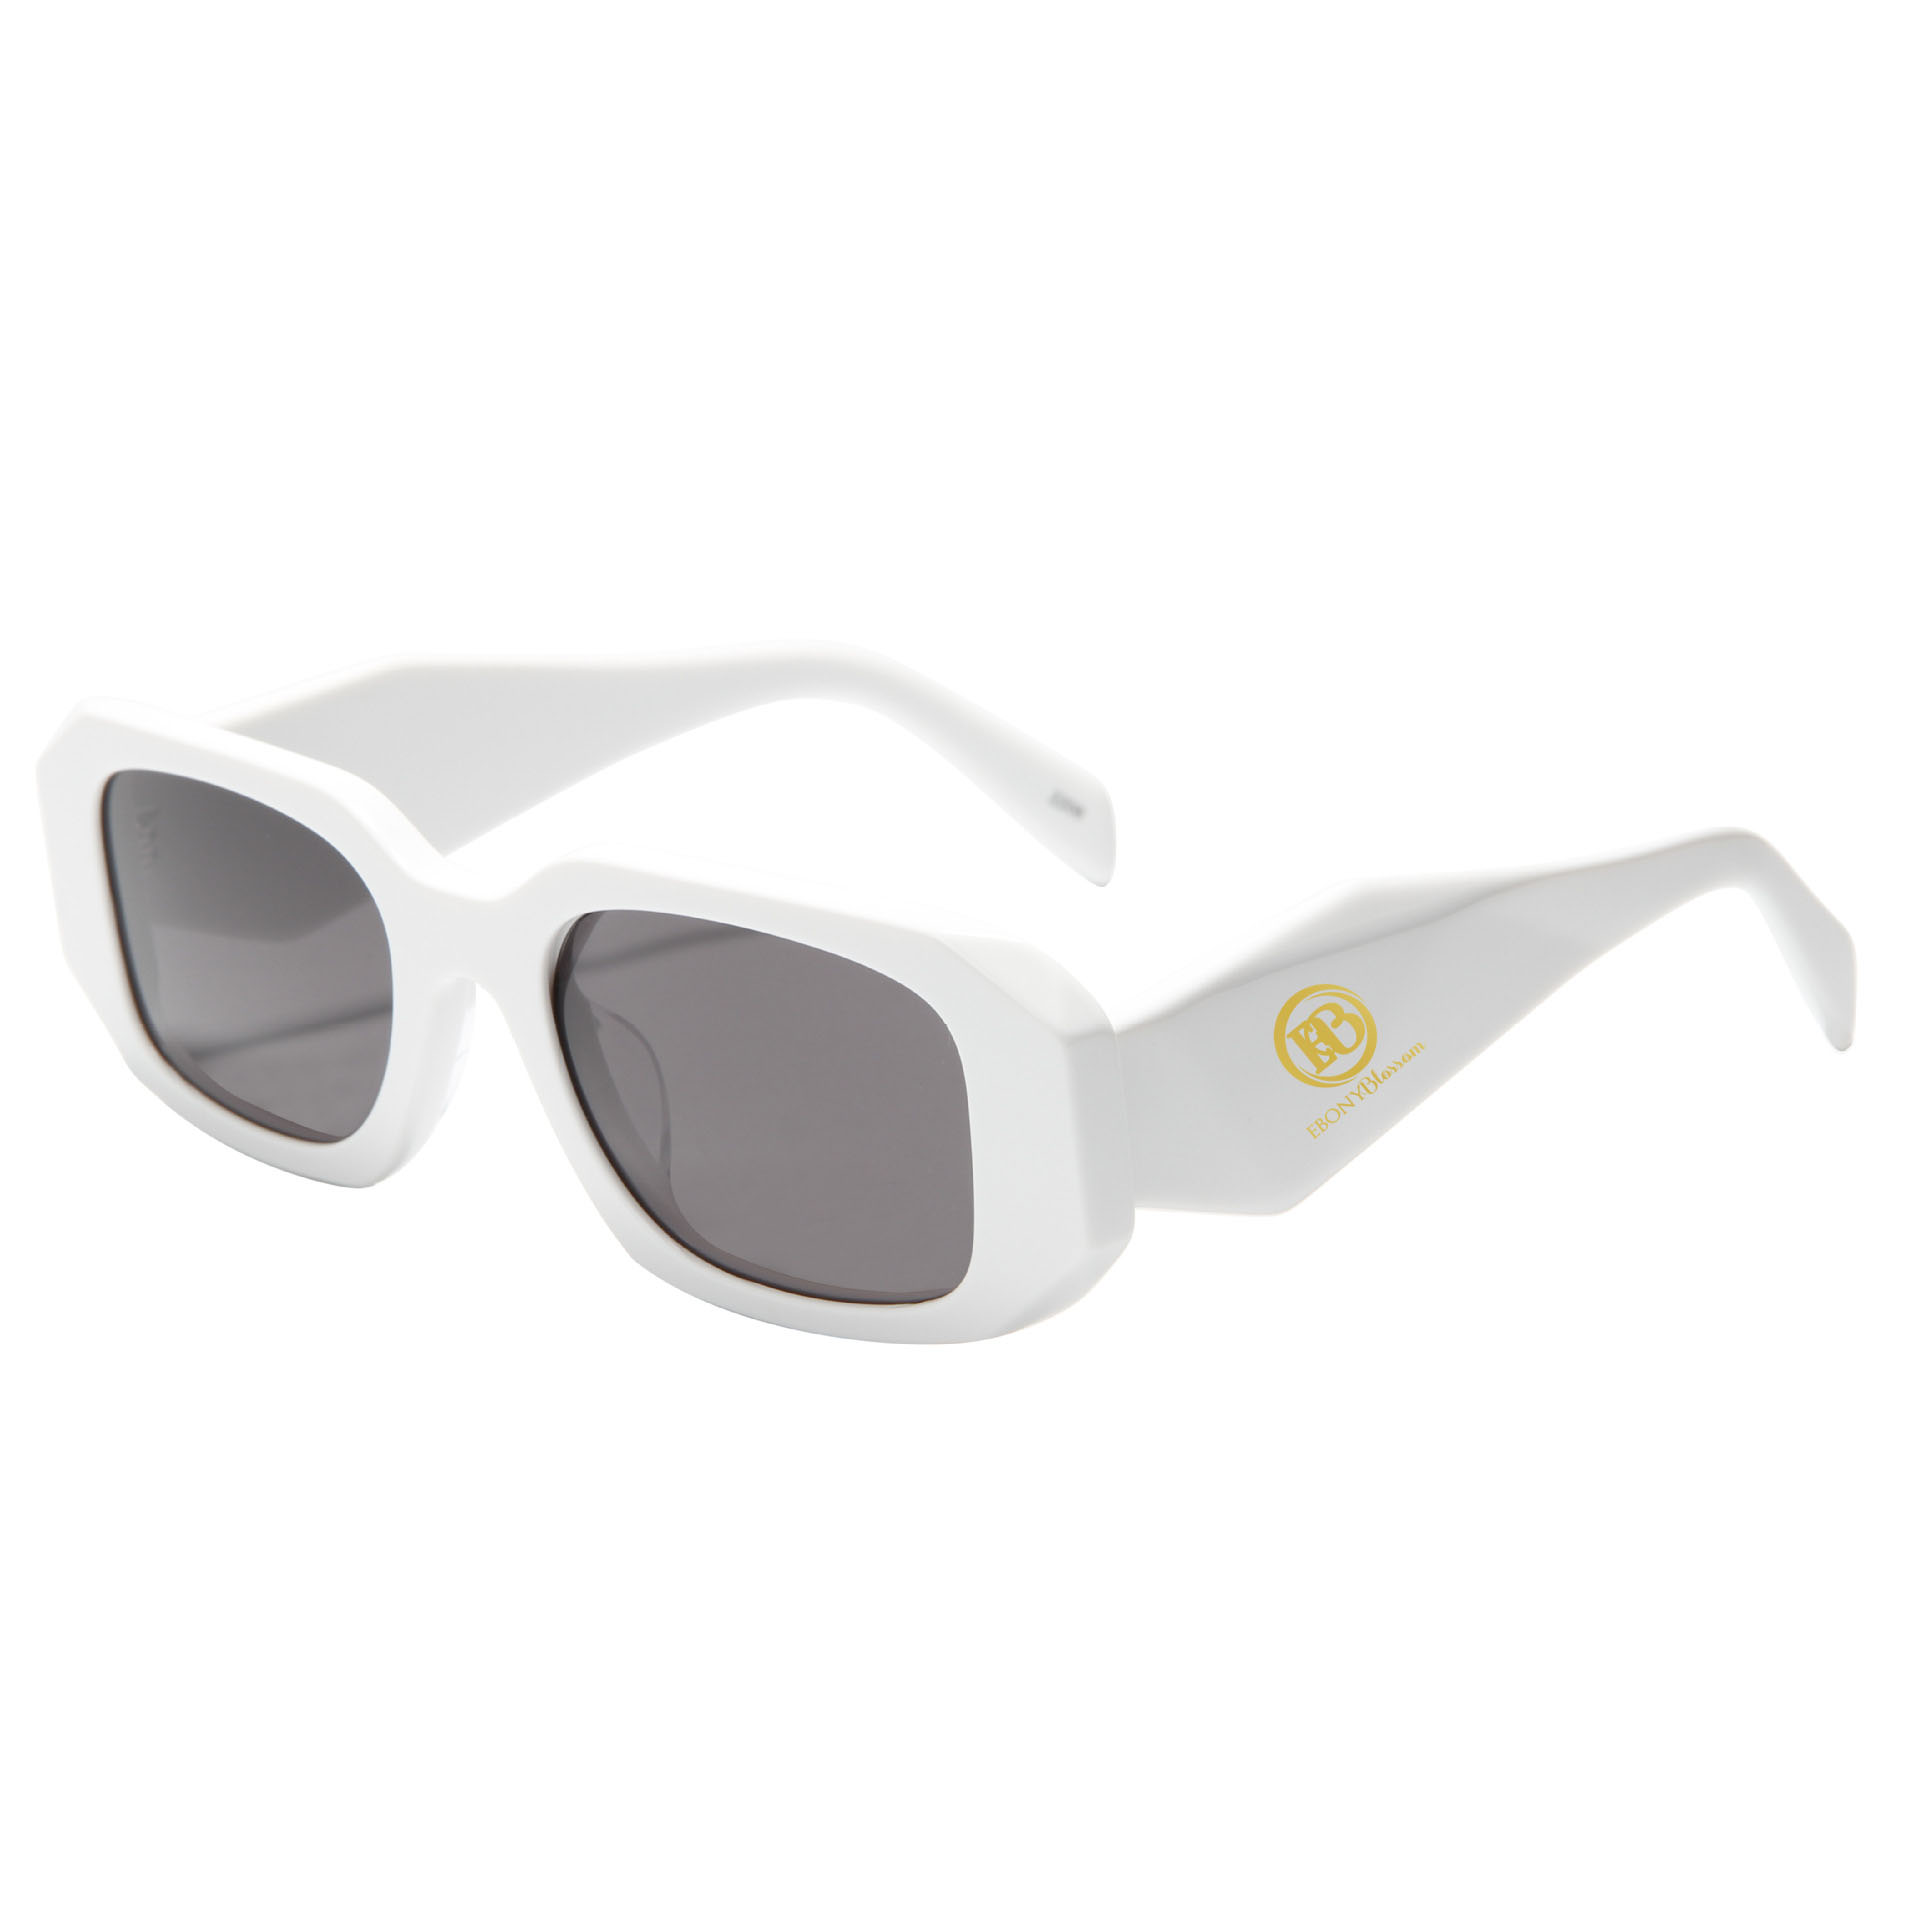 Ivory Gleam Designer Sunglasses